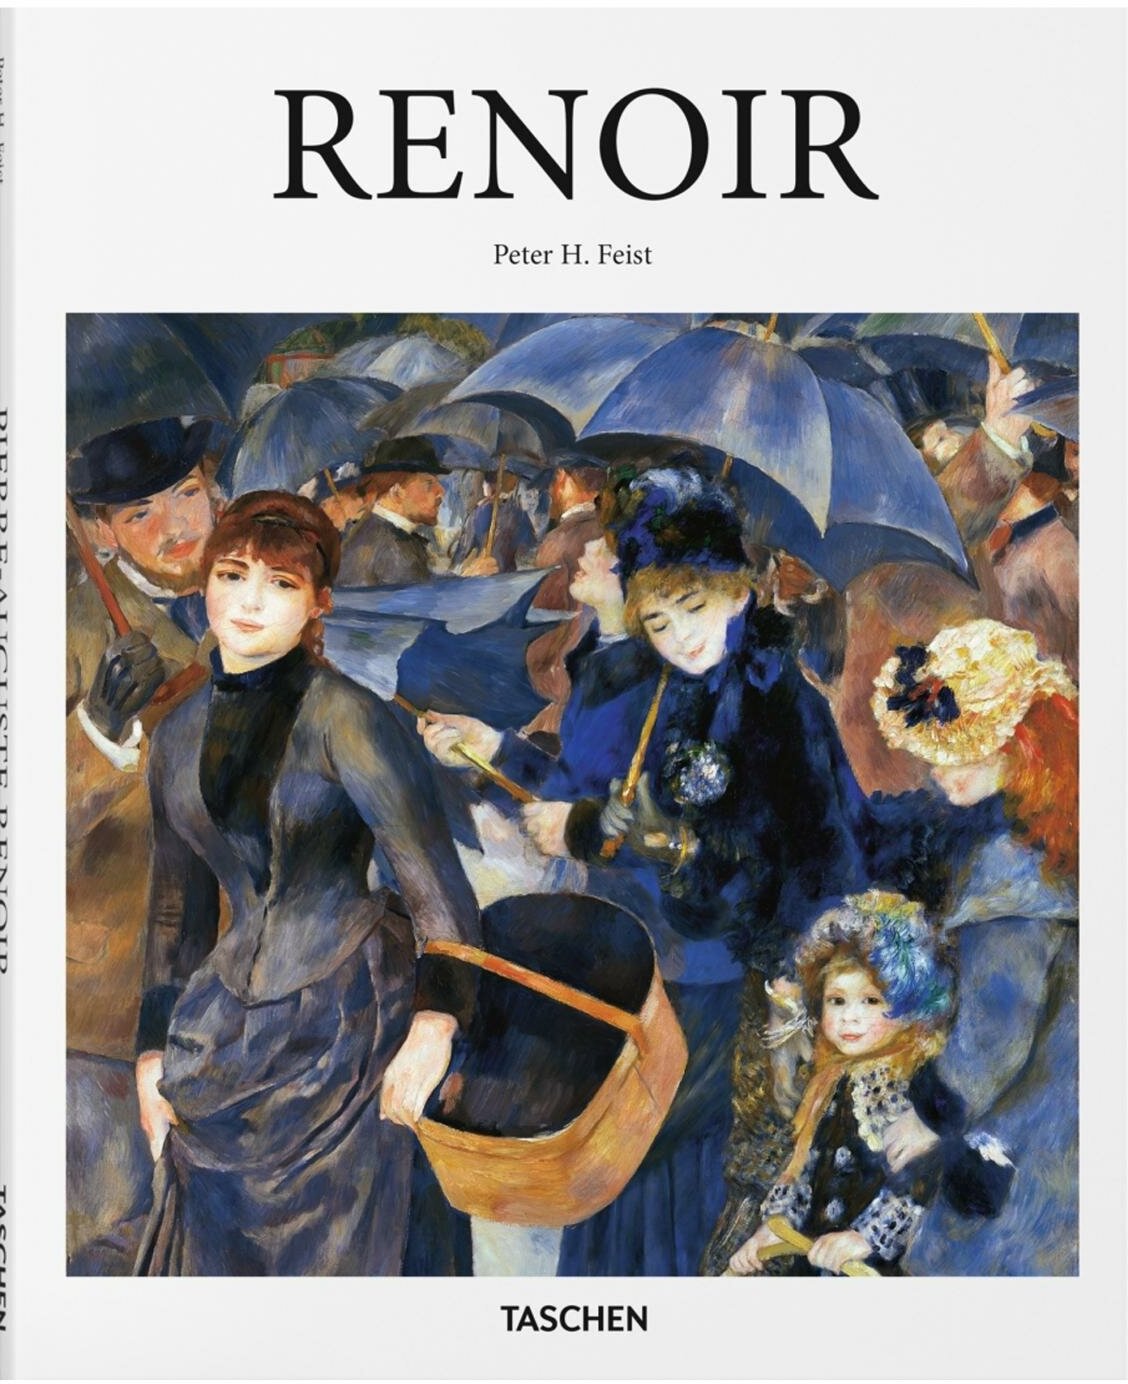 Pierre-Auguste Renoir (Файст П.Х.) - фото №1